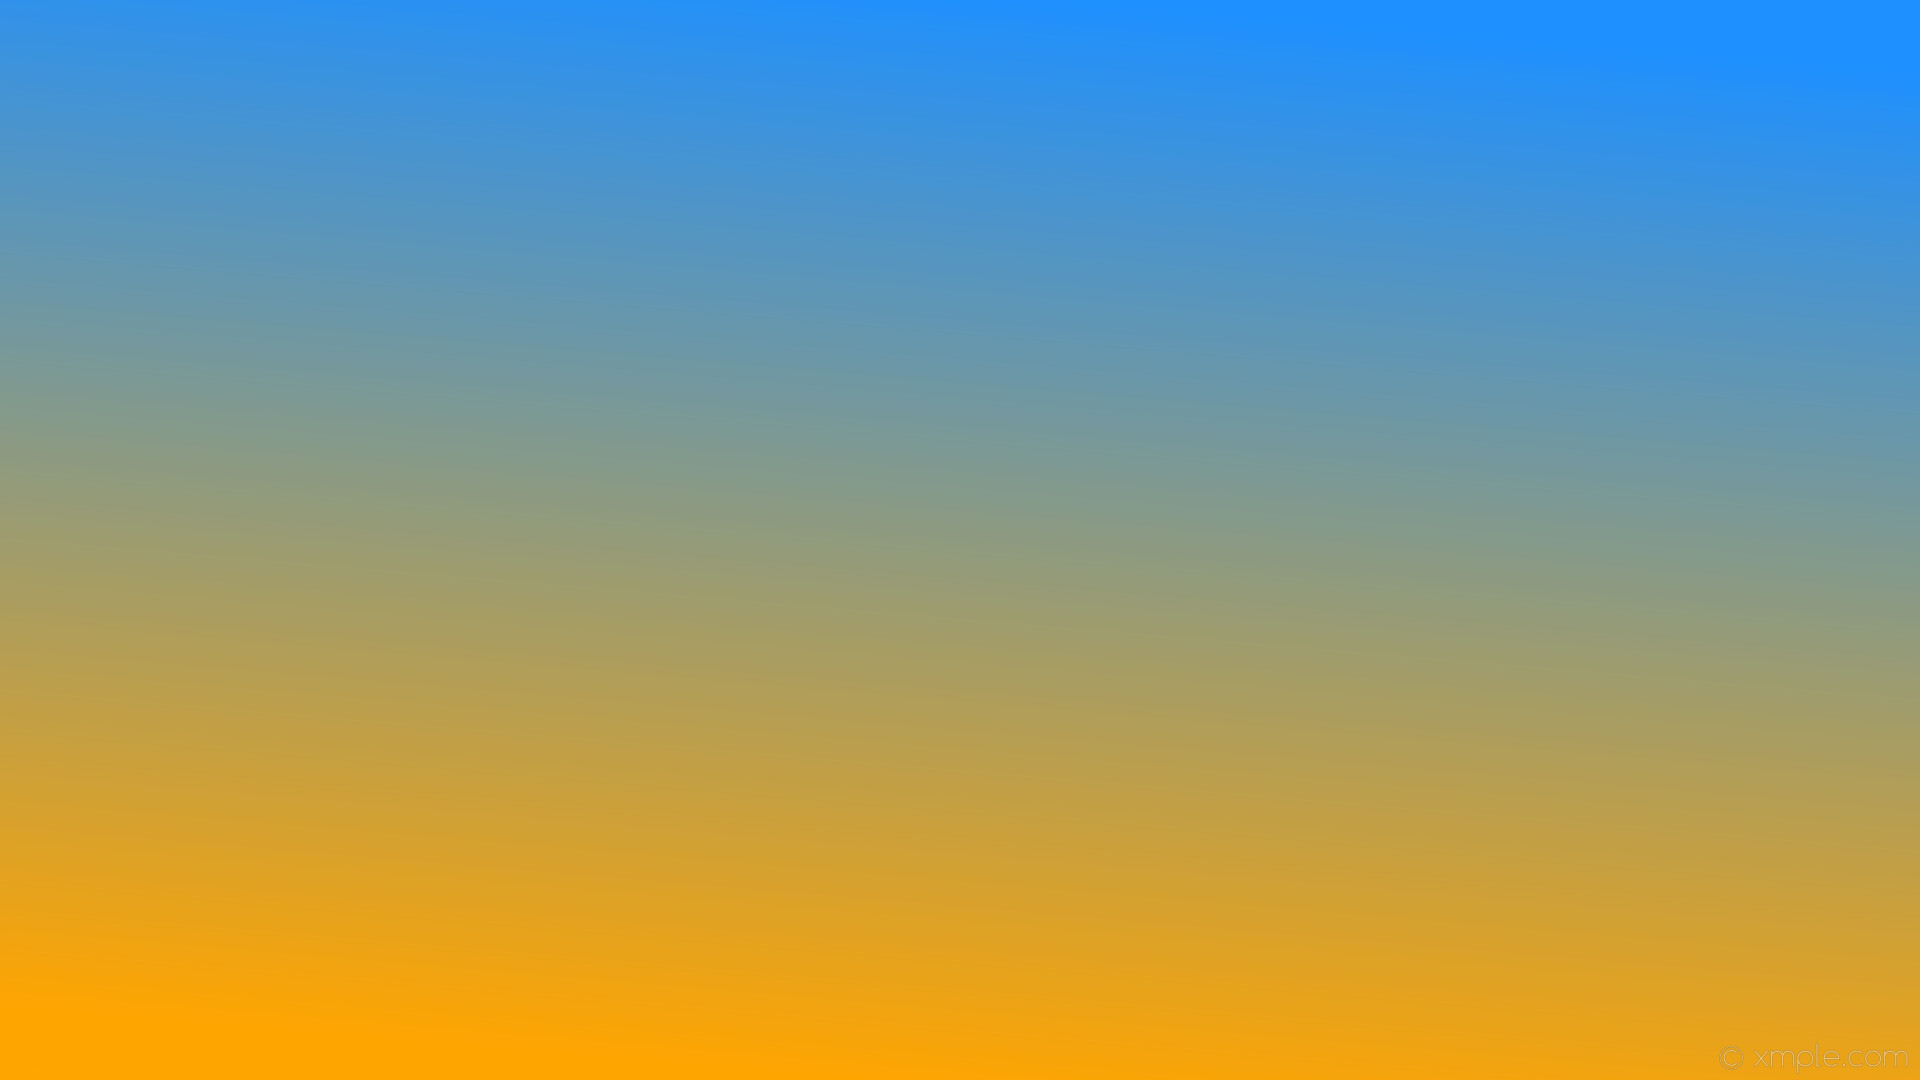 1920x1080 wallpaper blue orange gradient linear dodger blue #1e90ff #ffa500 75Â°